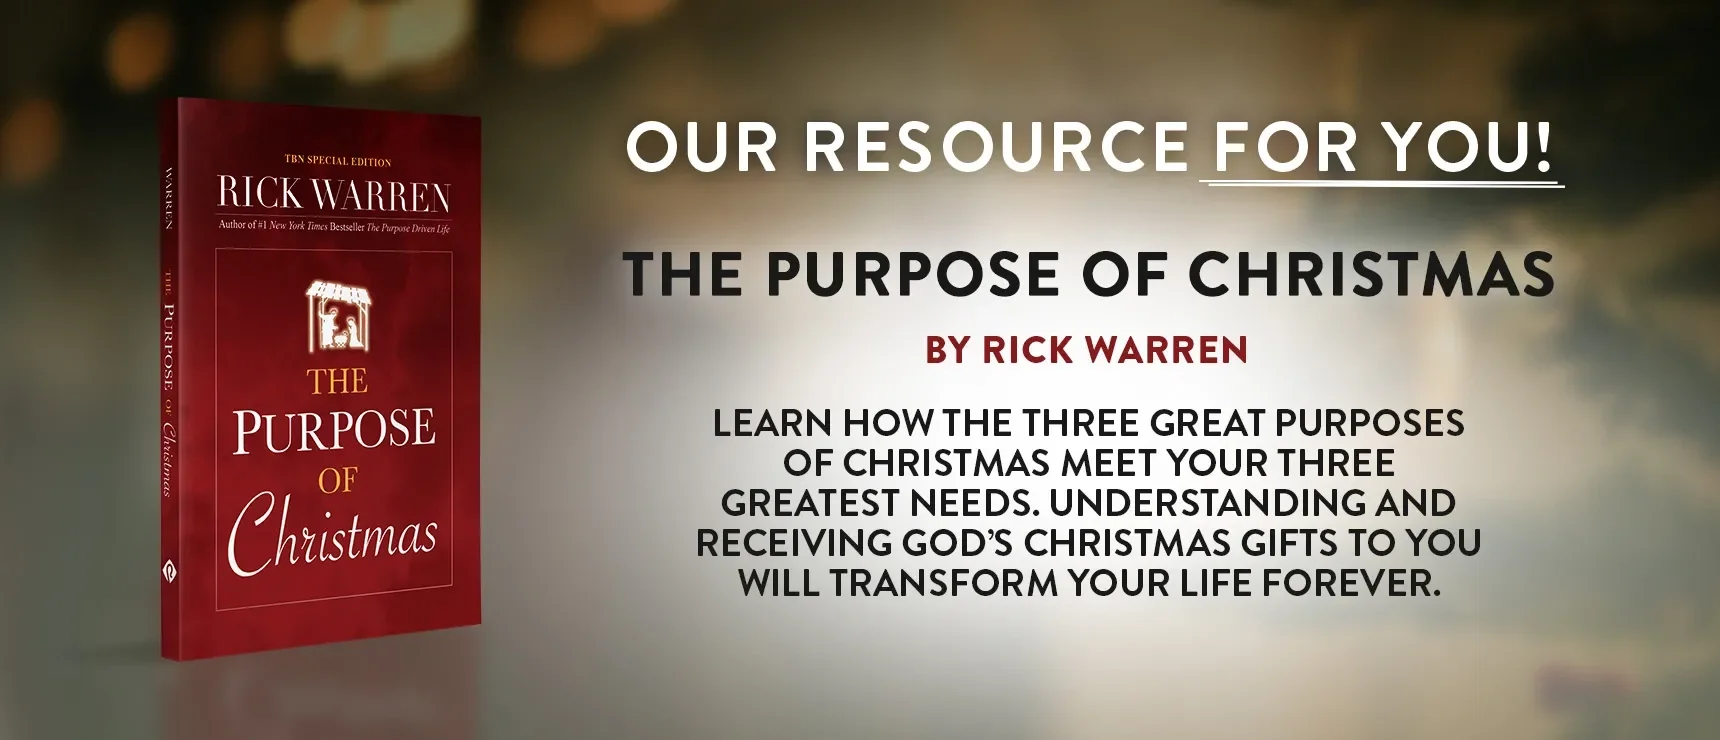 Purpose of Christmas by Rick Warren